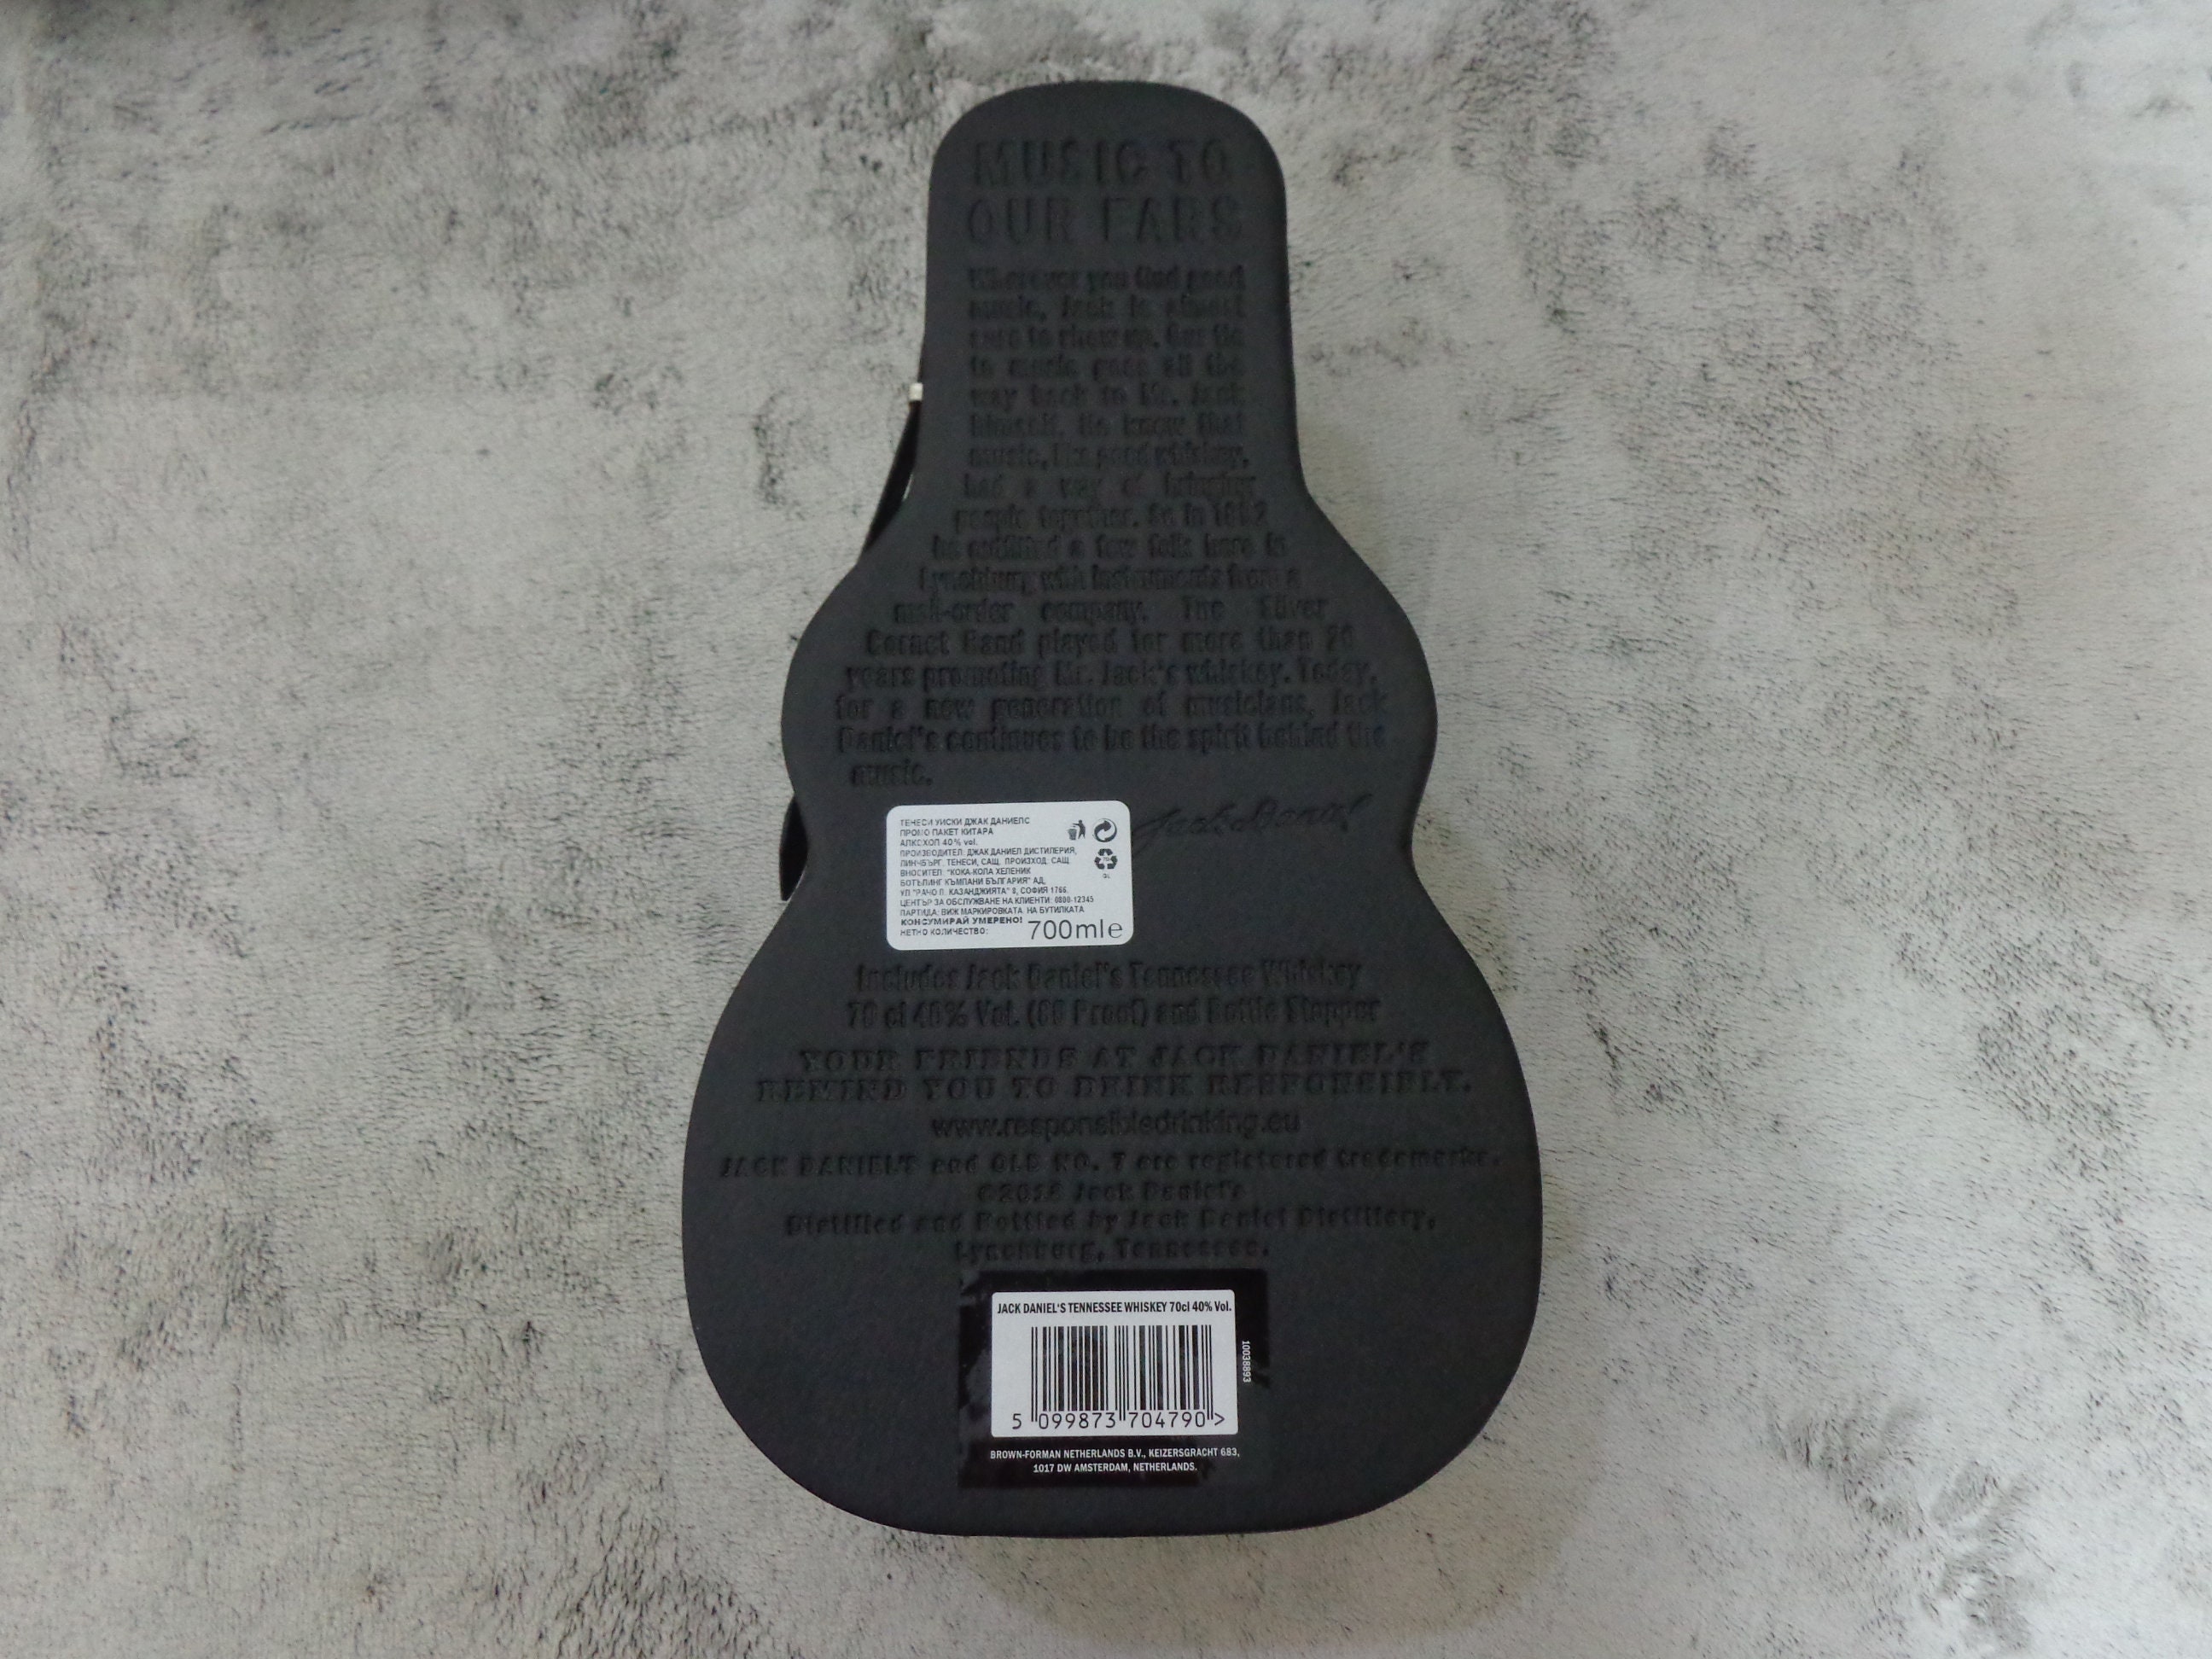 Jack Daniel's guitar case limited edition, in una custodia unica!